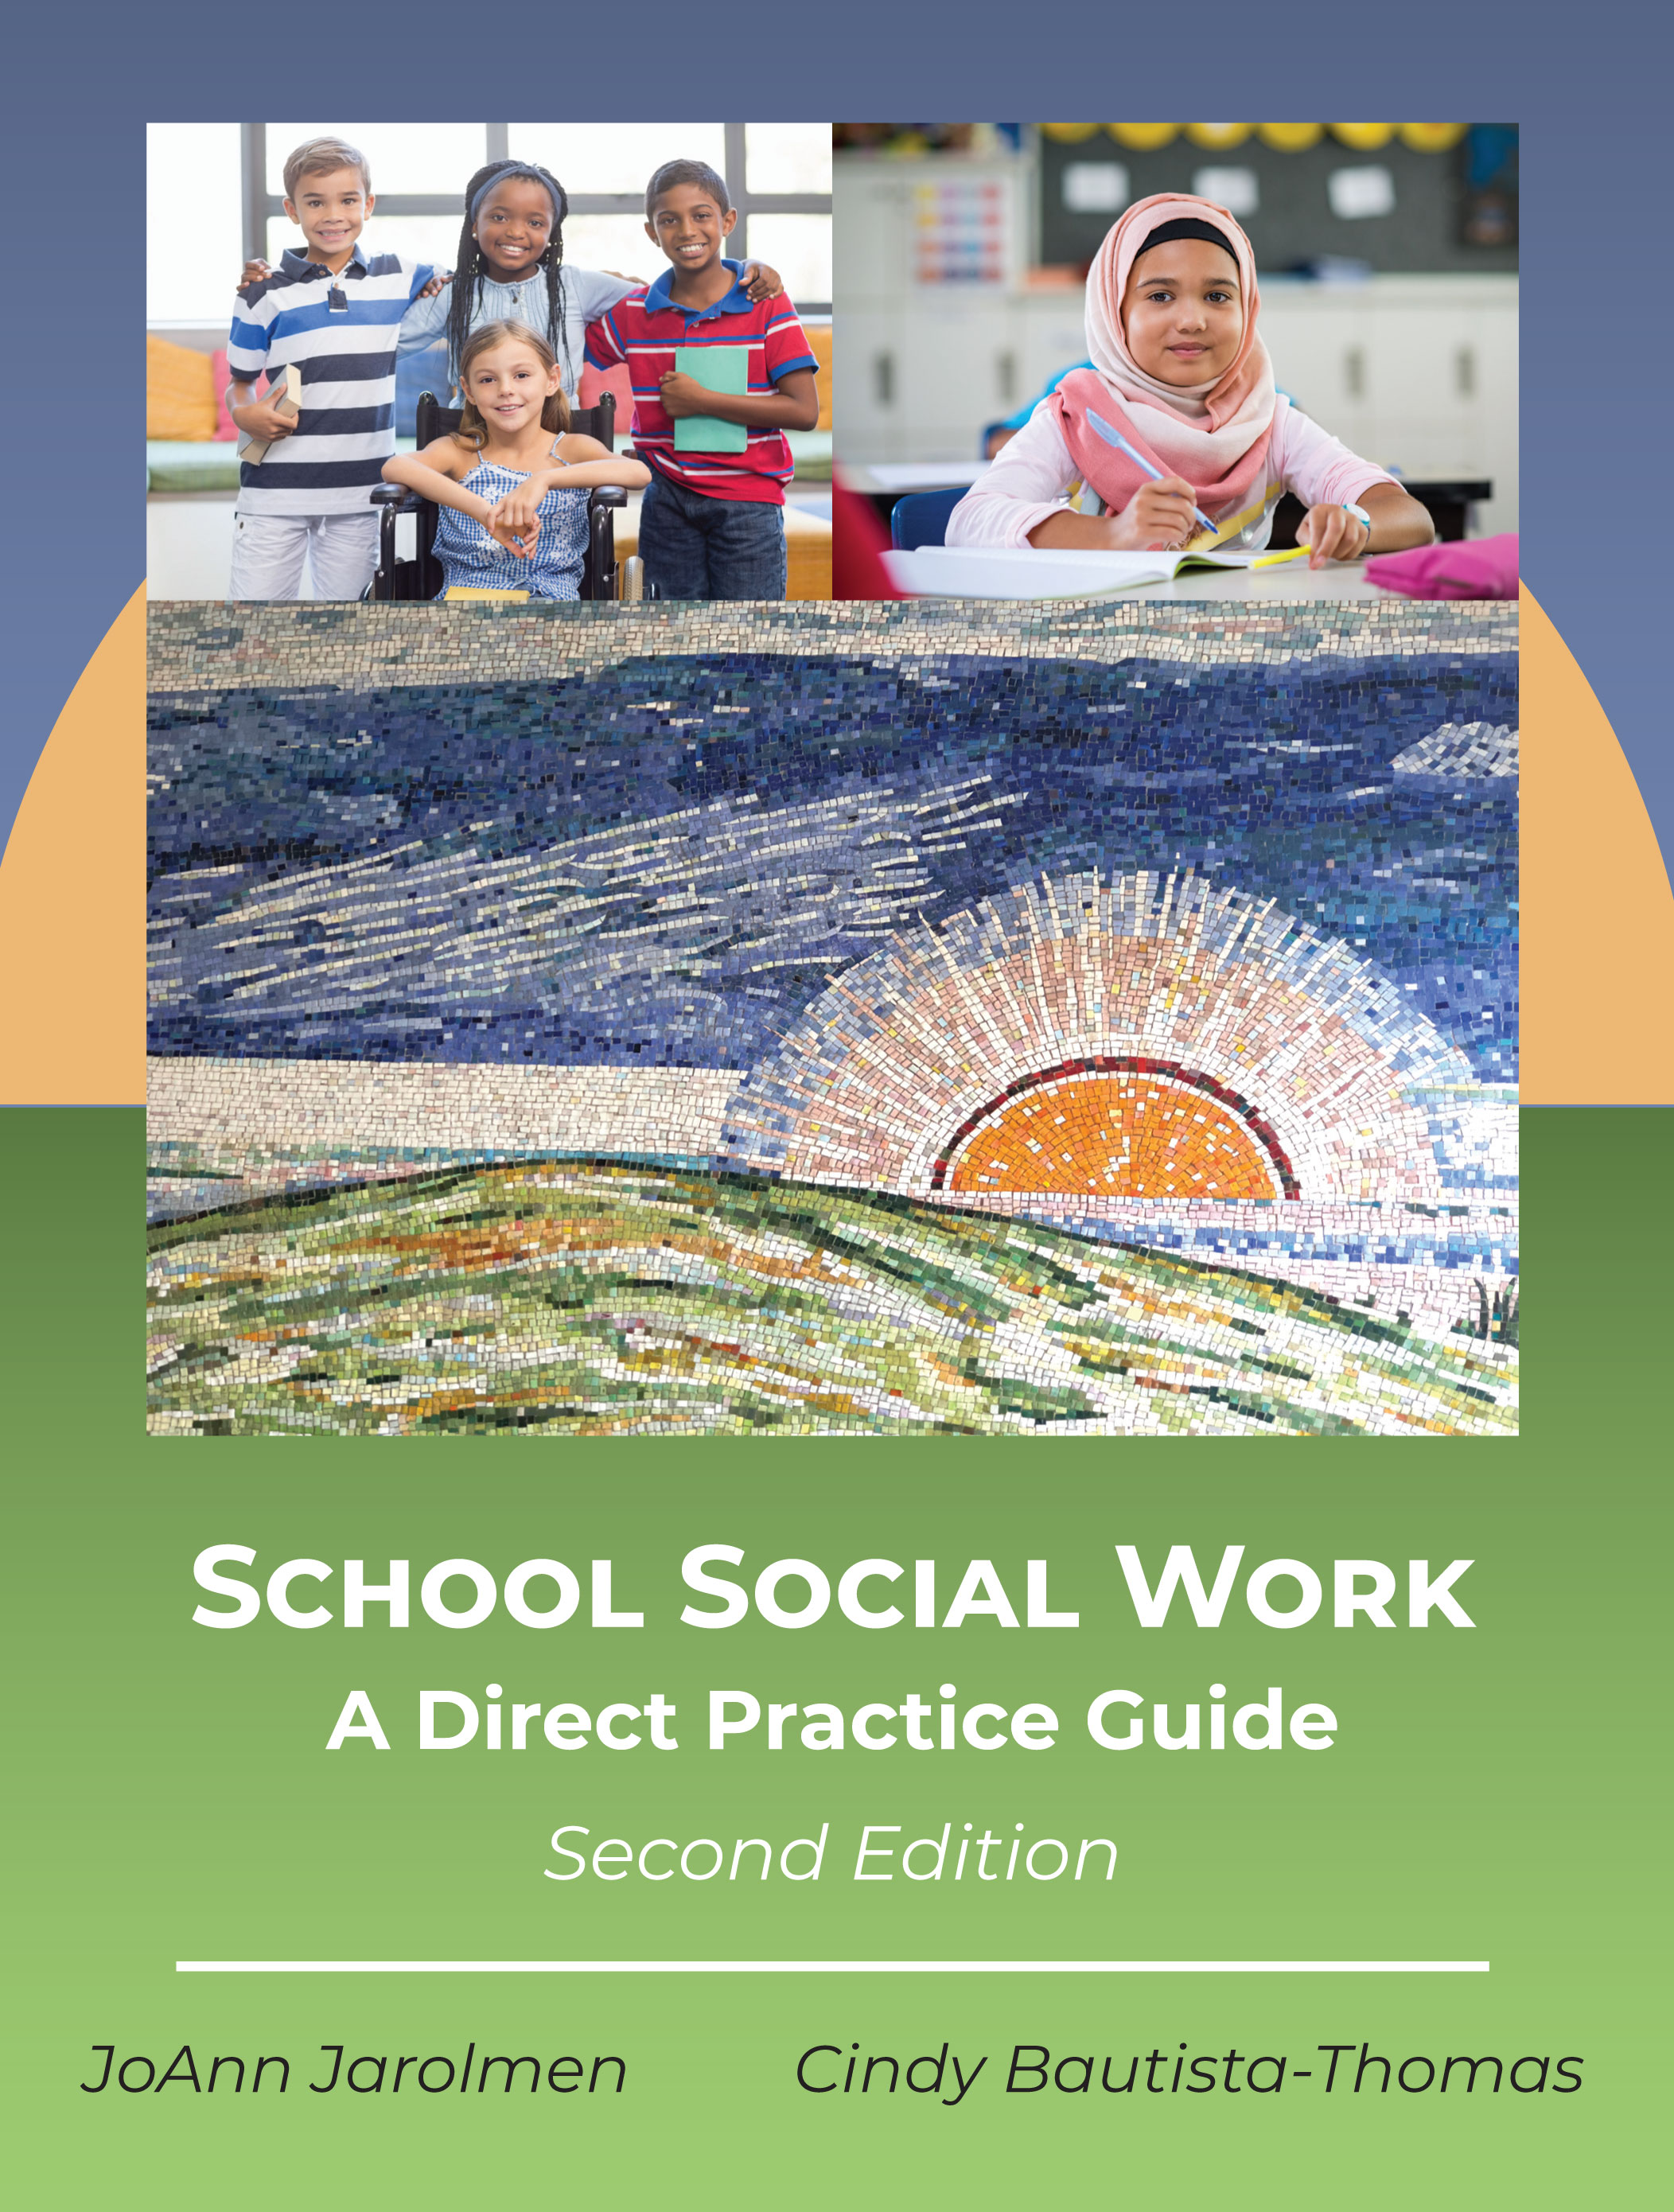 School Social Work: A Direct Practice Guide, Second Edition by JoAnn  Jarolmen, Cindy  Bautista-Thomas